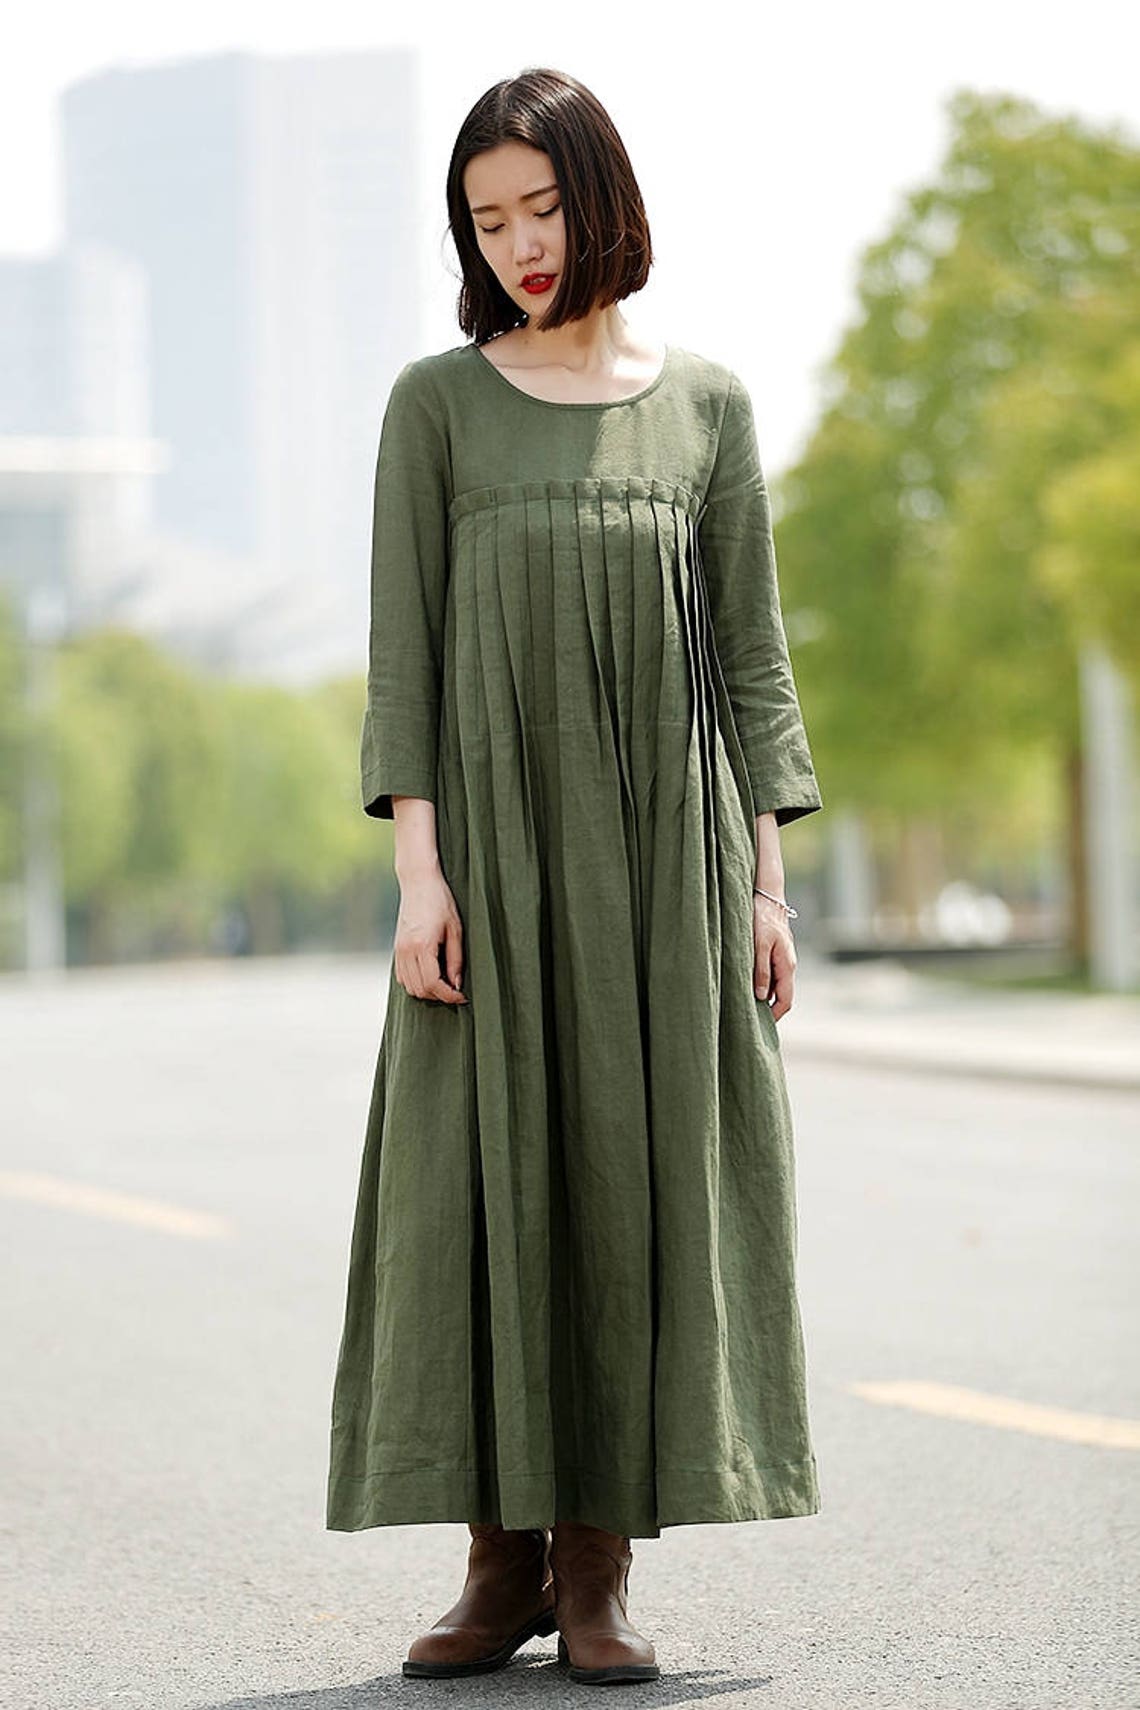 Green Linen Dress long linen dress Pleated dress loose | Etsy